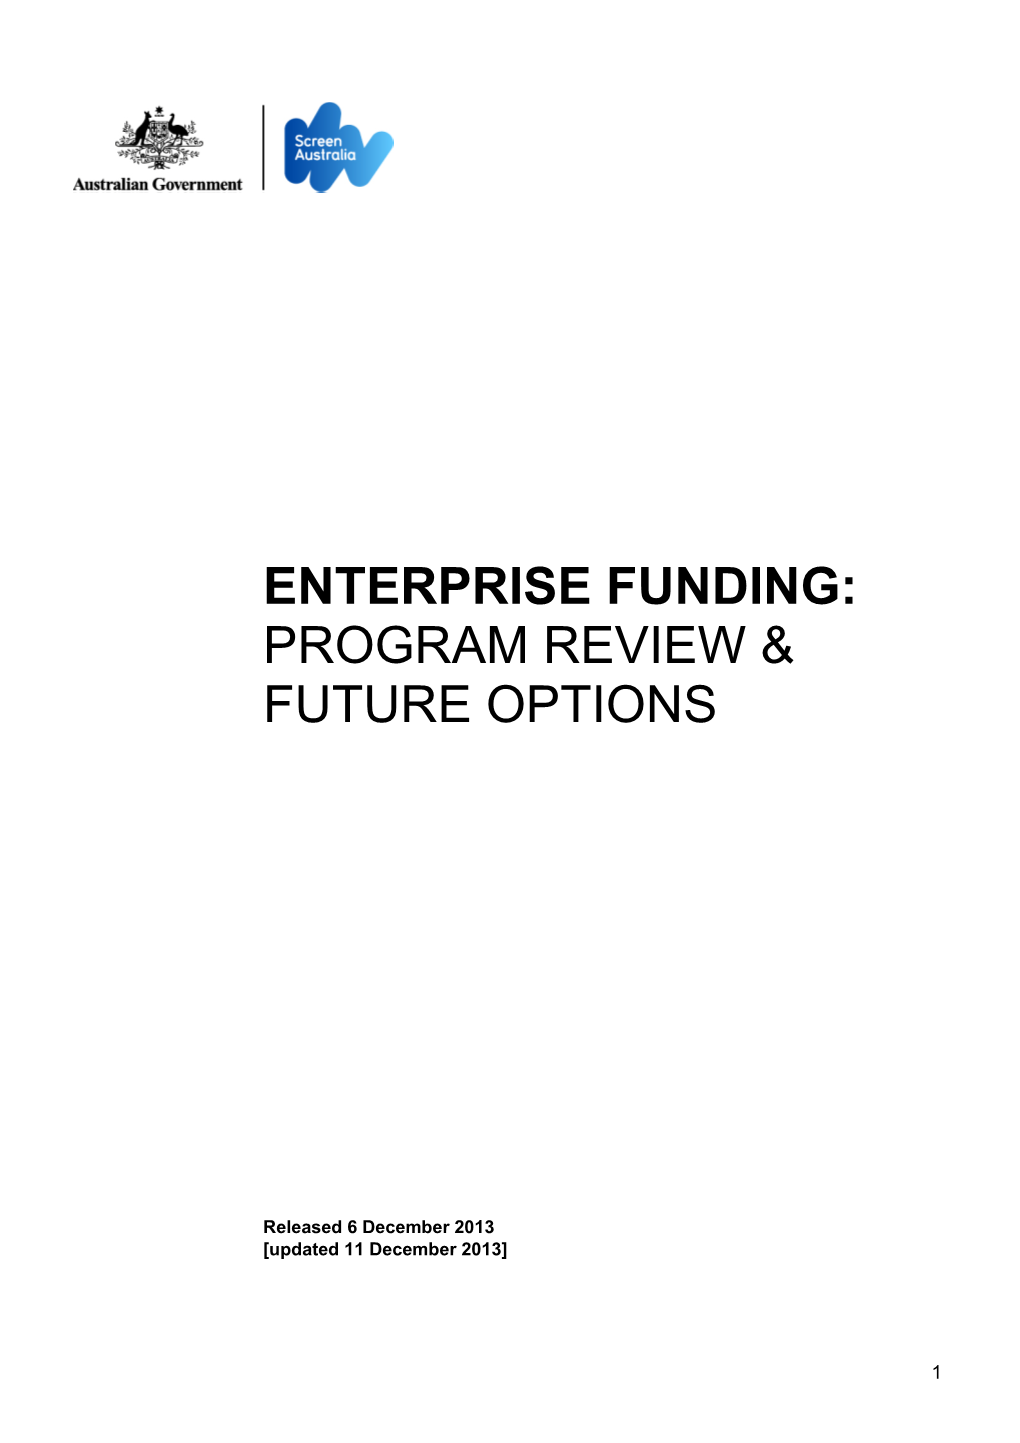 Enterprise Funding: Program Review & Future Options